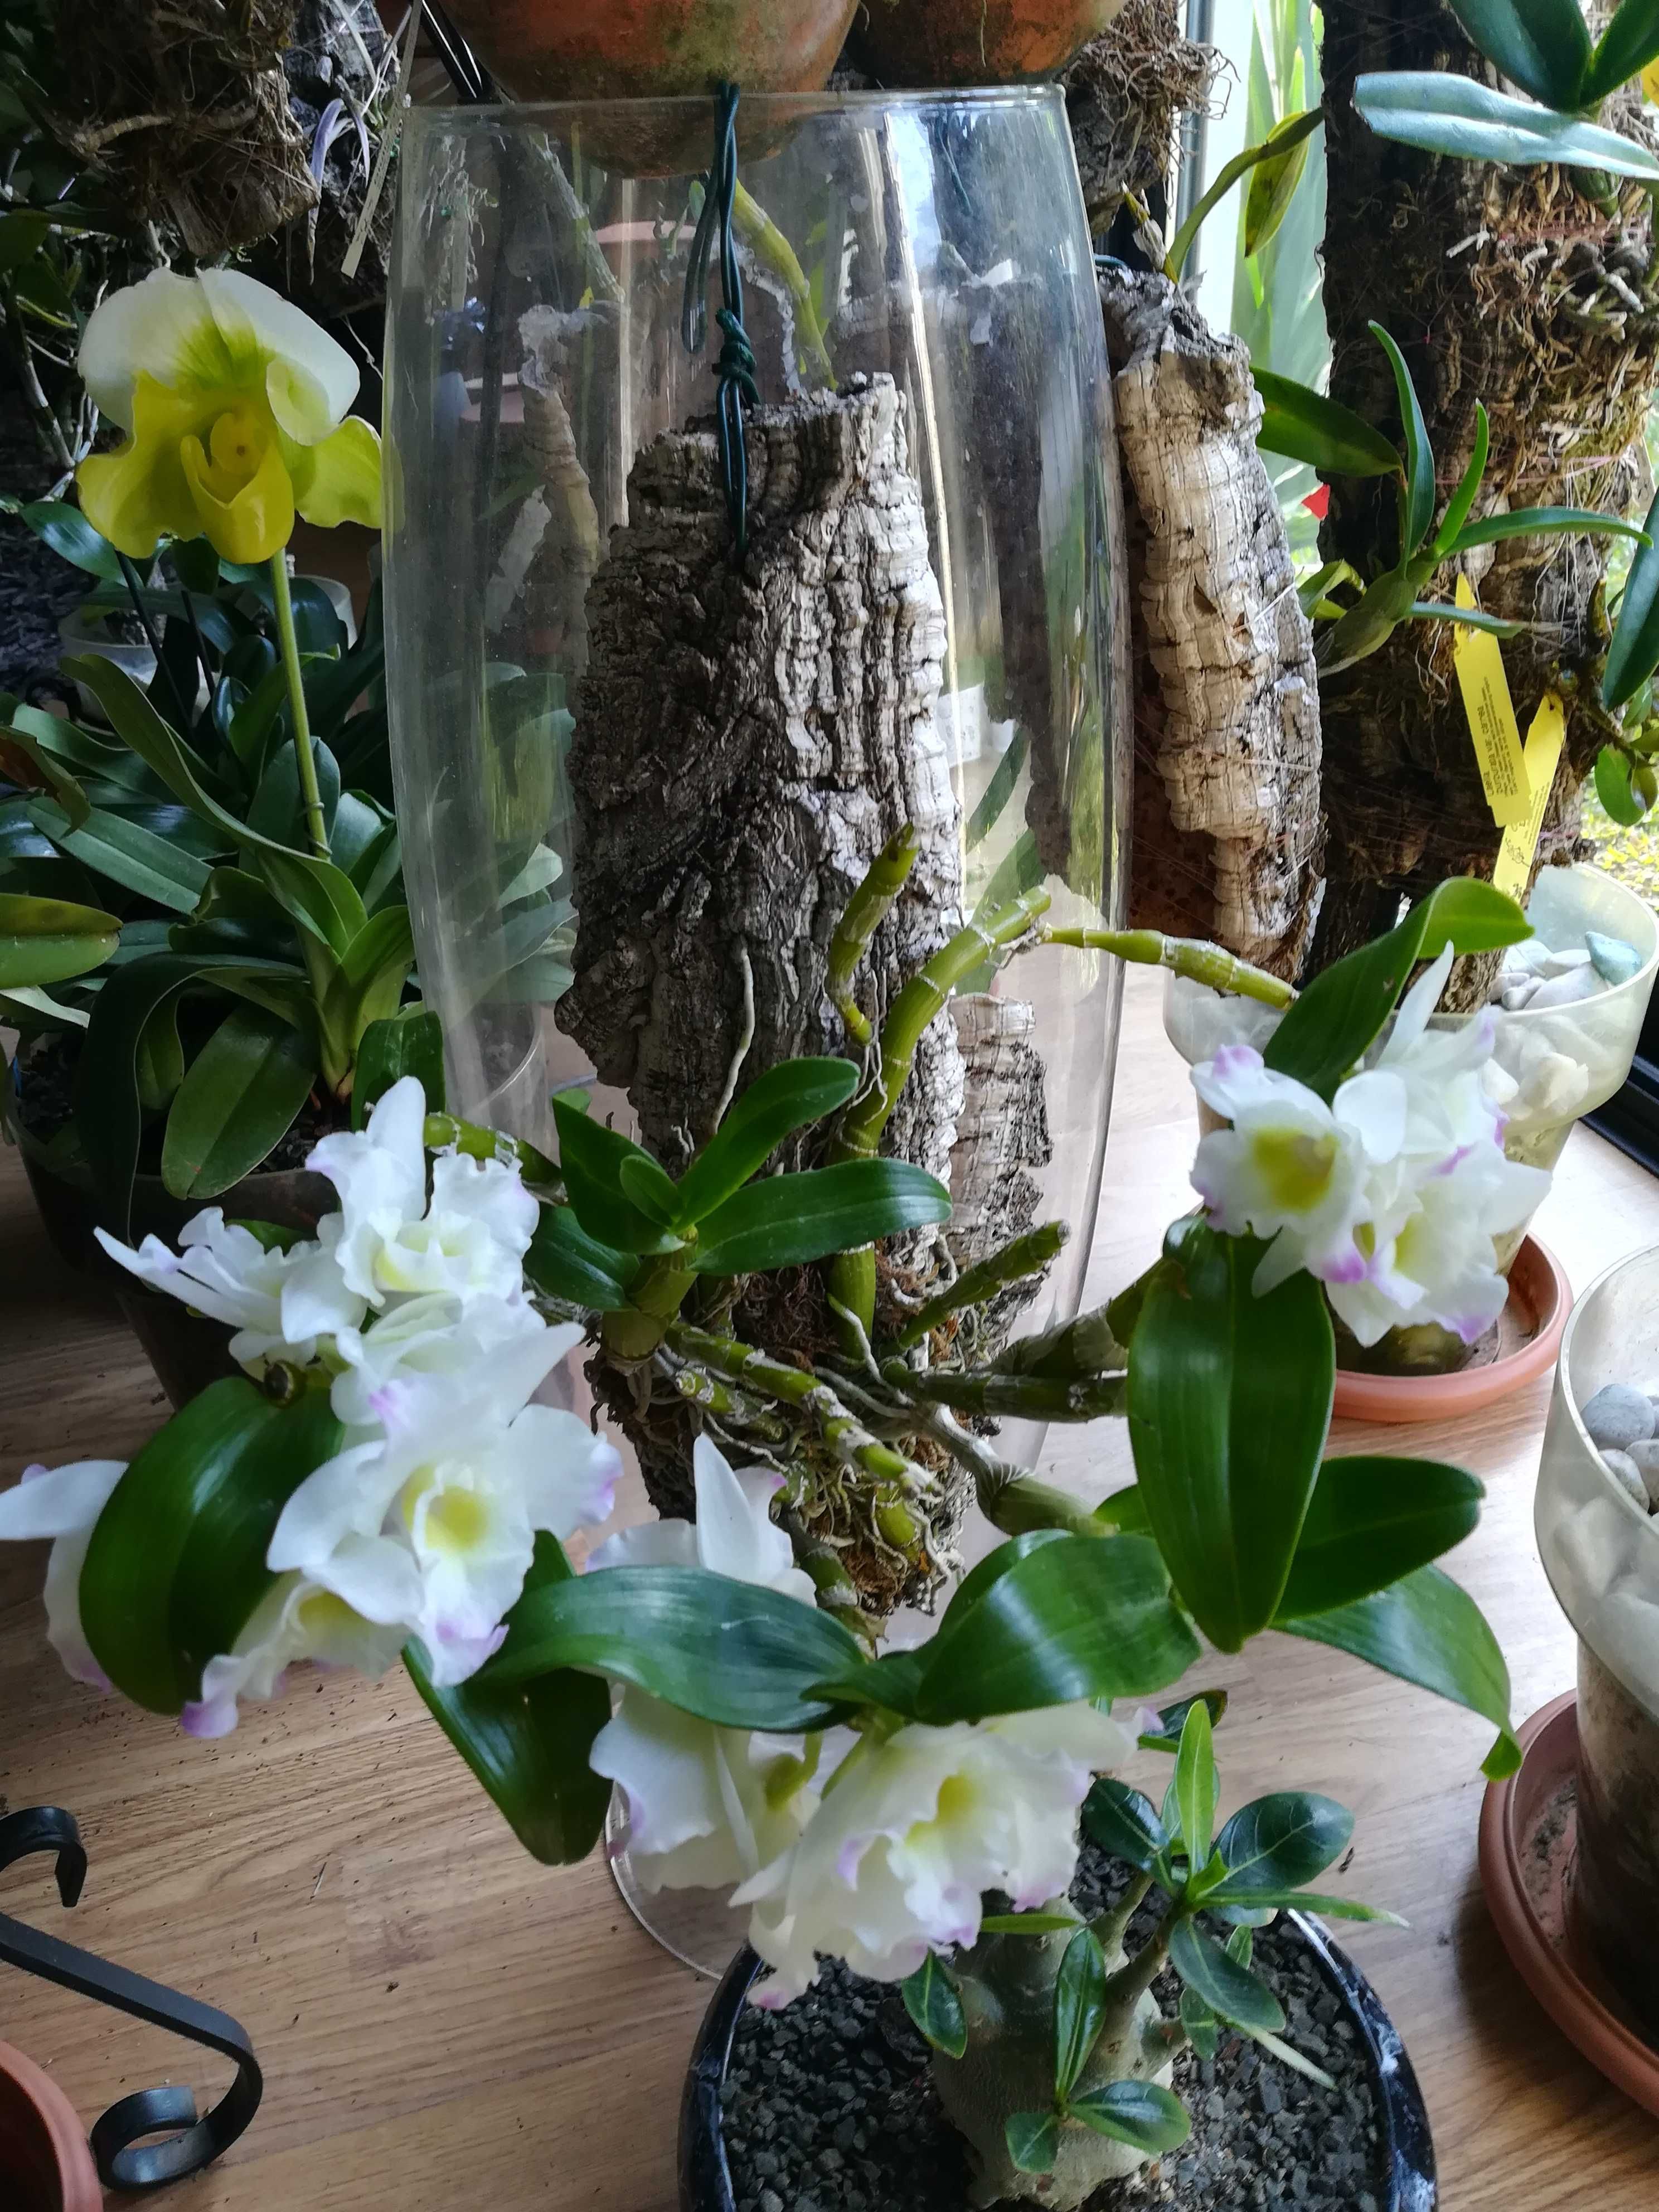 Linda orquídea dendrobium